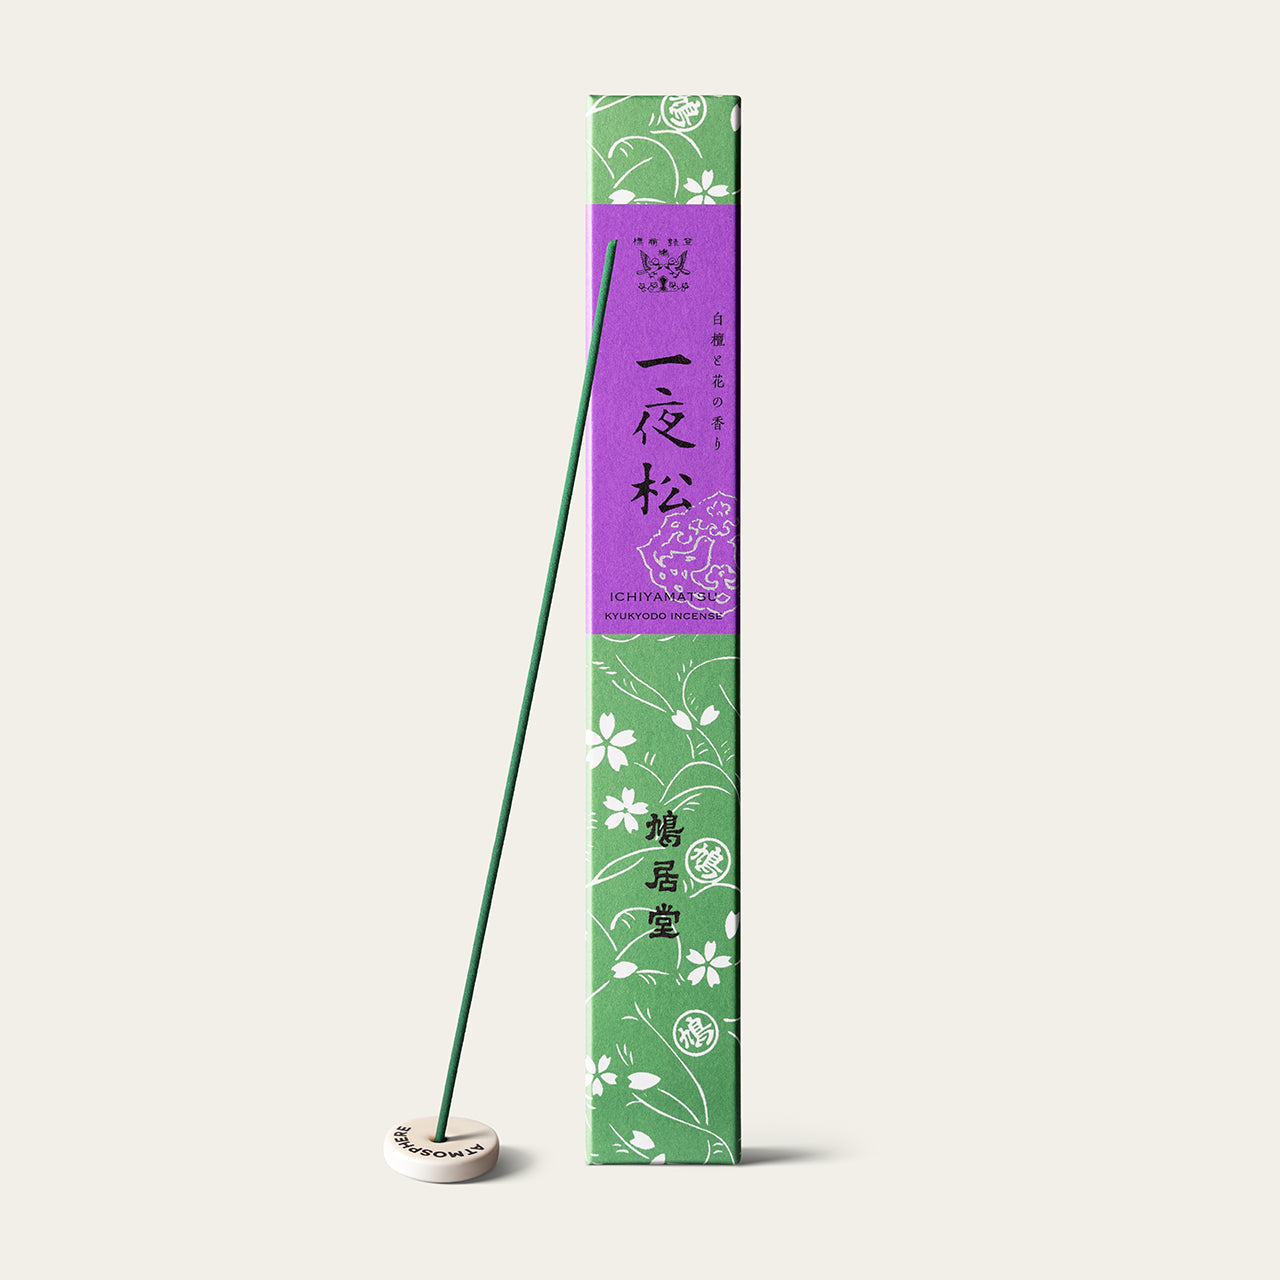 Kyukyodo One Night Pine Ichiyamatsu 17cm Japanese incense sticks (60 sticks) with Atmosphere ceramic incense holder